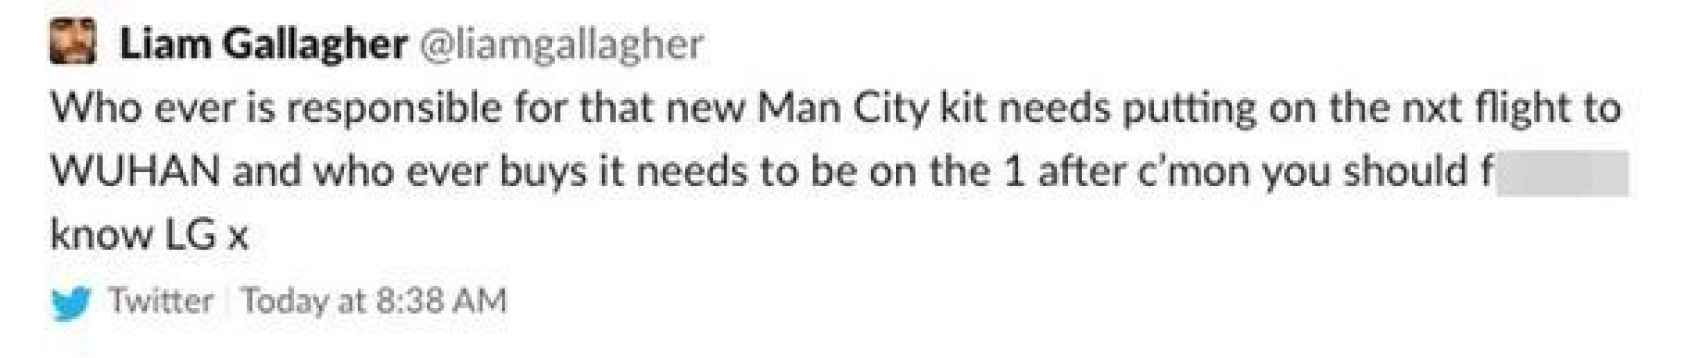 El tuit de Liam Gallagher criticando la tercera camiseta del Manchester City